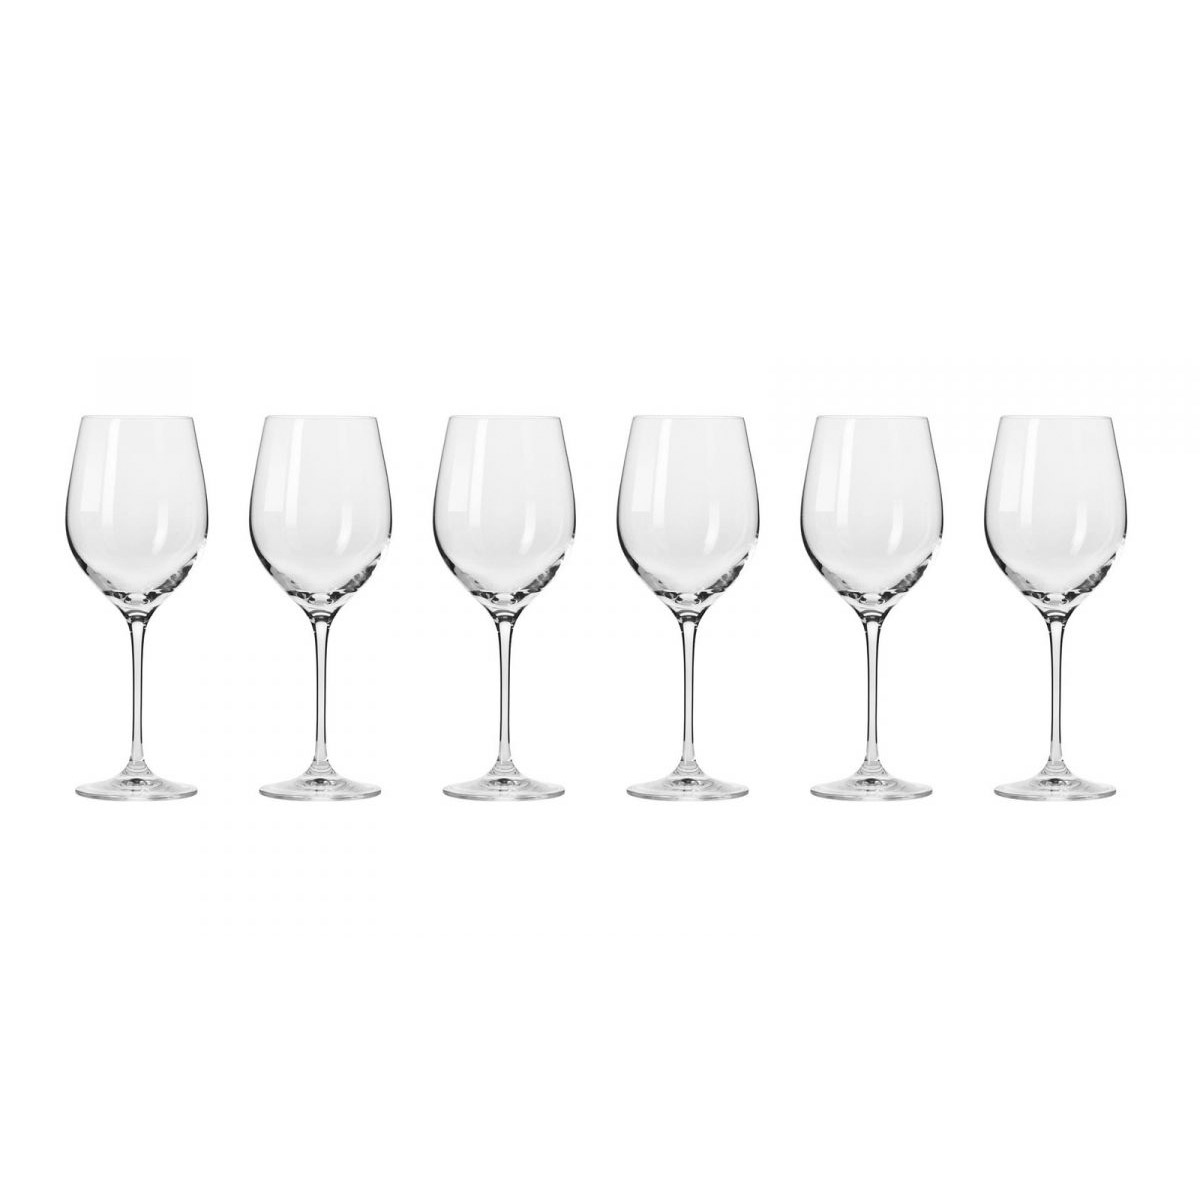 Набор бокалов Krosno Гармония для красного вина 0,37 л набор бокалов krosno гармония просекко для вина 0 28 л